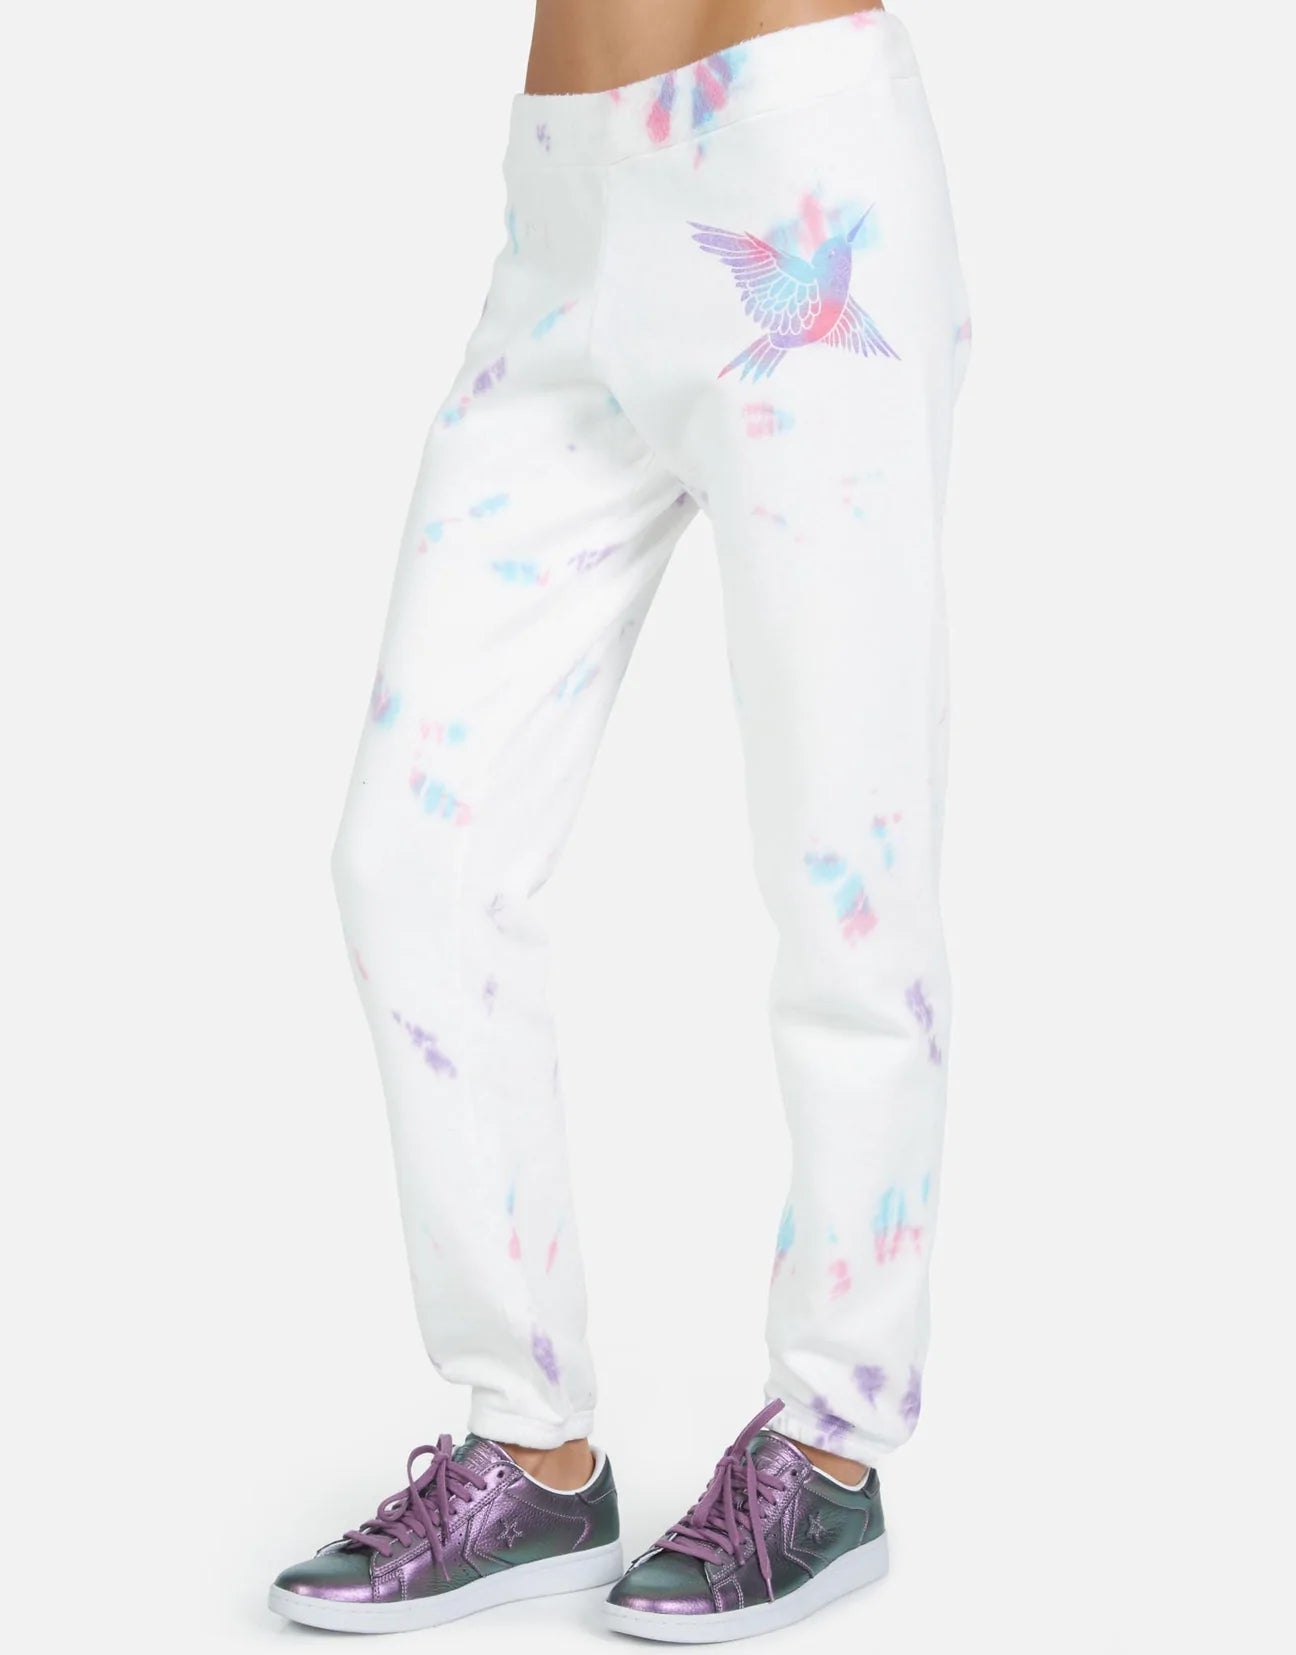 Shop Lauren Moshi Gia Pretty Hummingbird Jogger Pants - Premium Jogging Pants from Lauren Moshi Online now at Spoiled Brat 